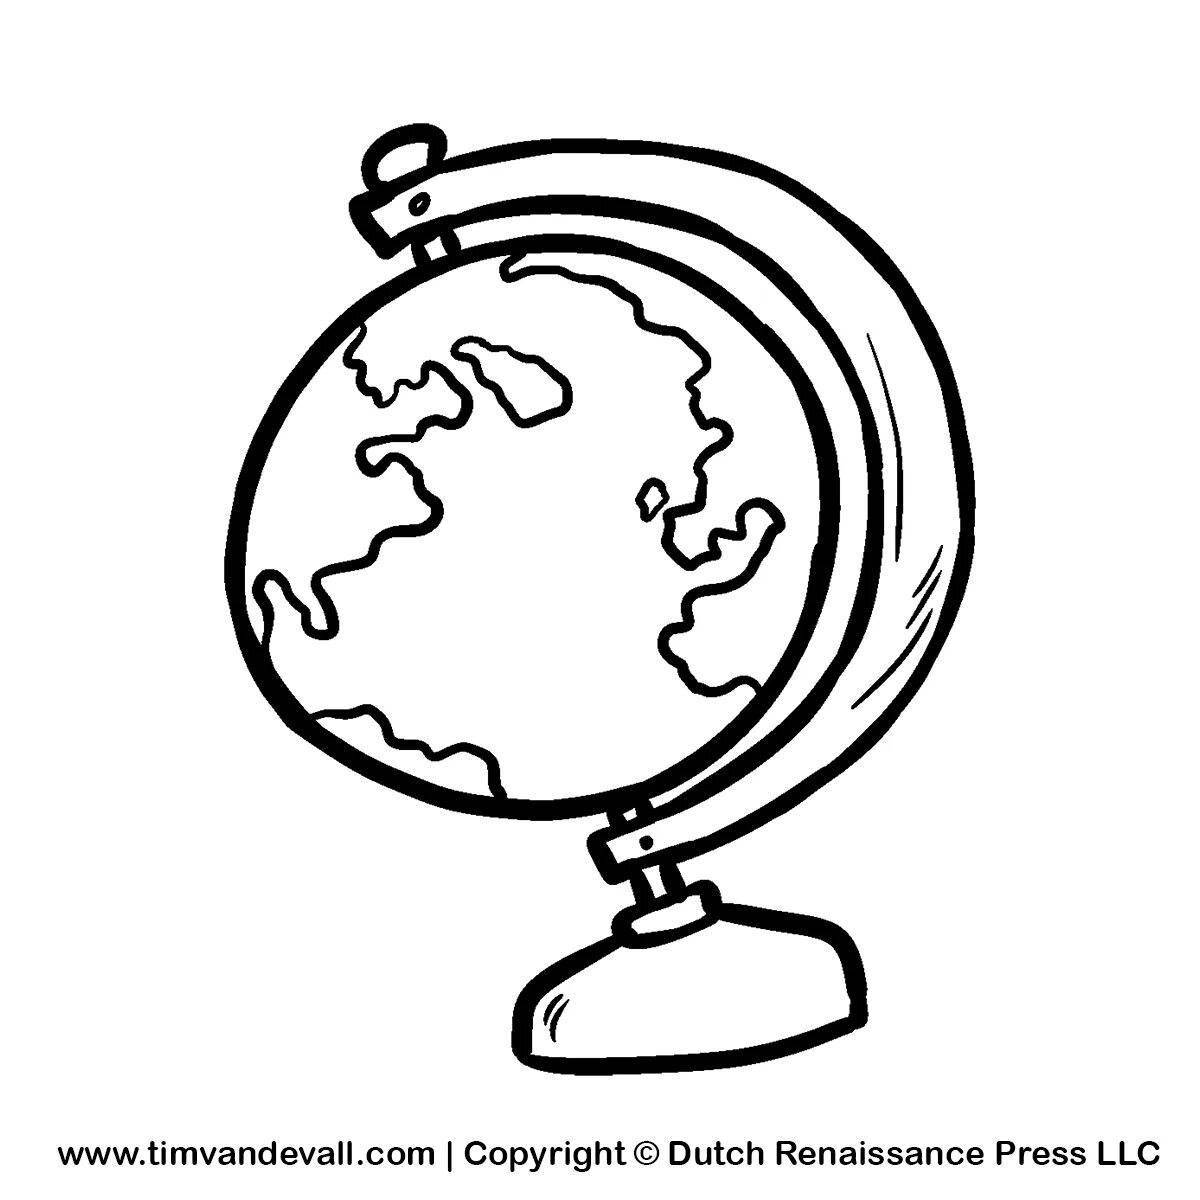 Children's globe drawing for #5